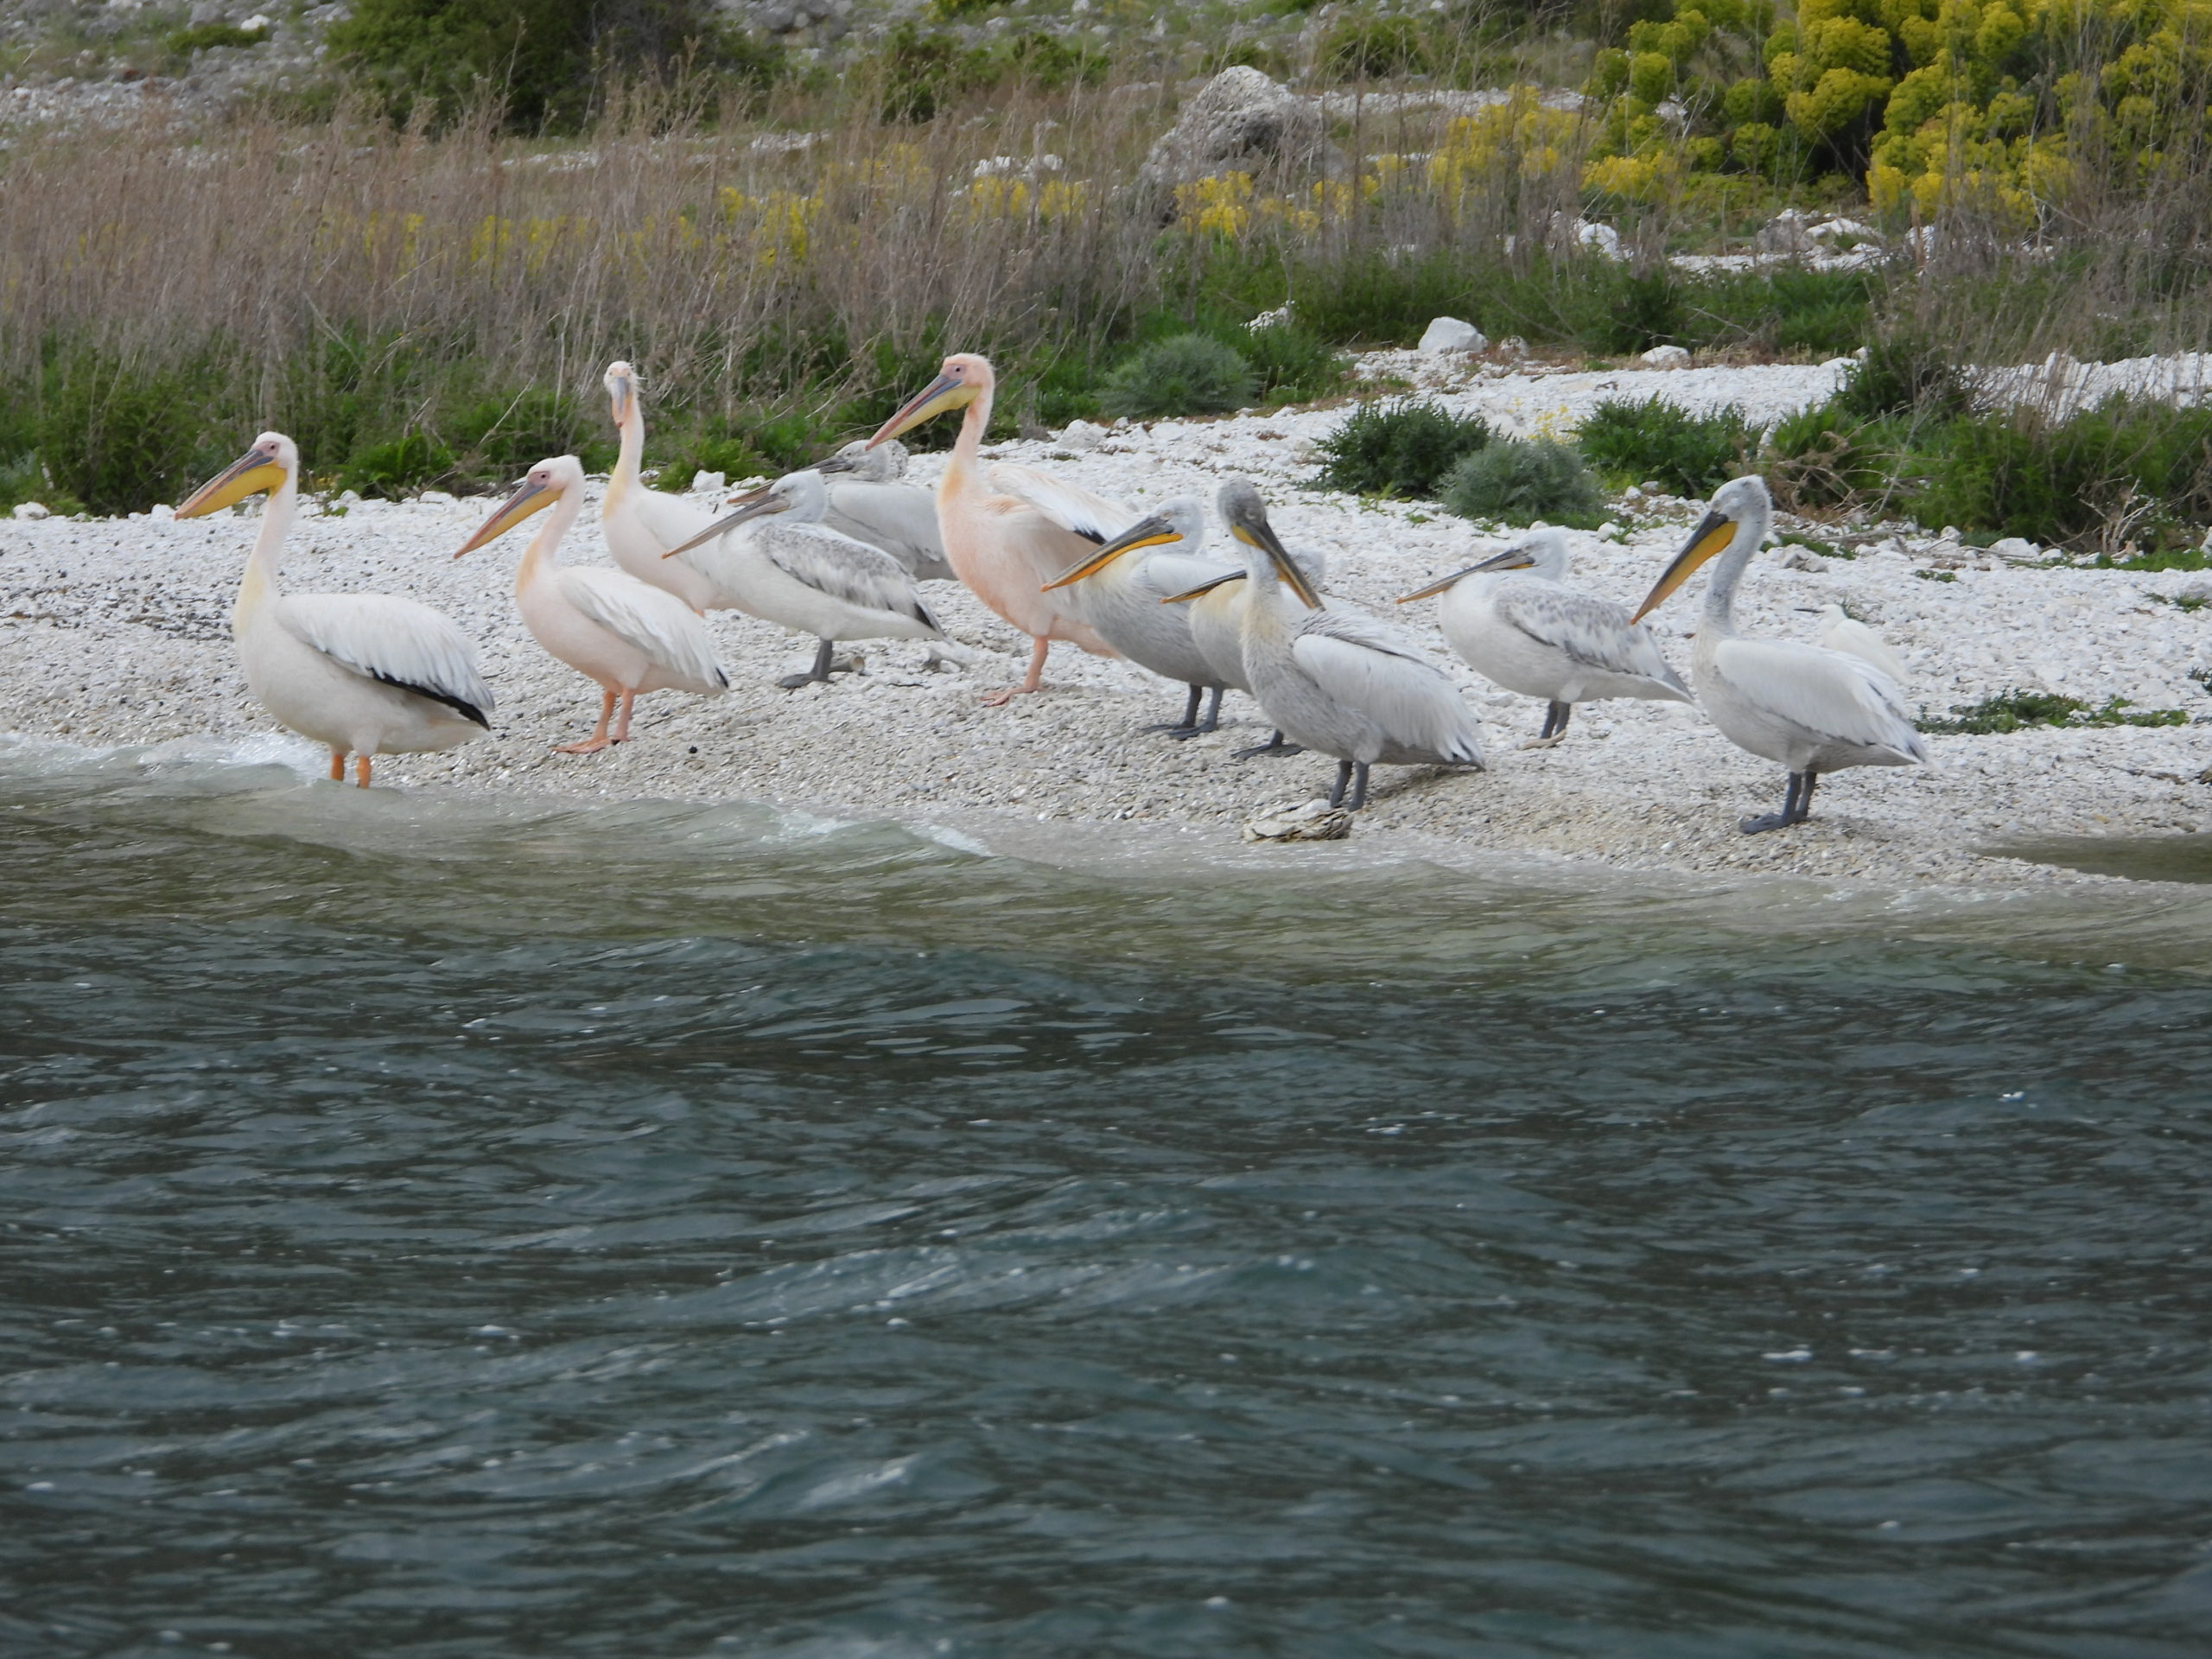 The European census of the Dalmatian pelican at the Prespa lakes